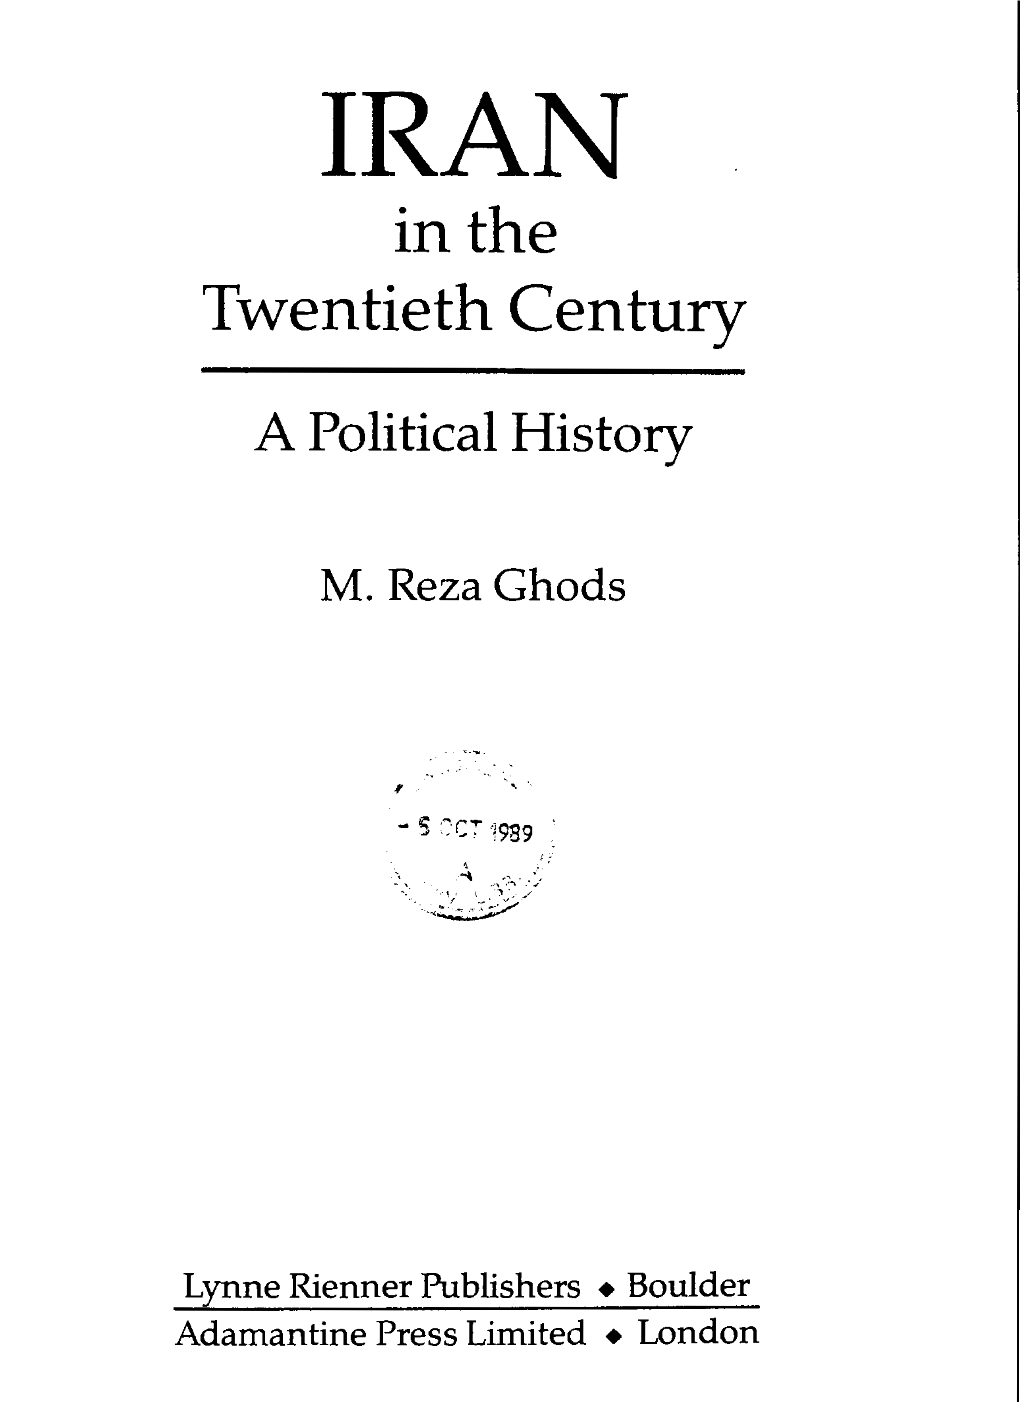 IRAN in the Twentieth Century